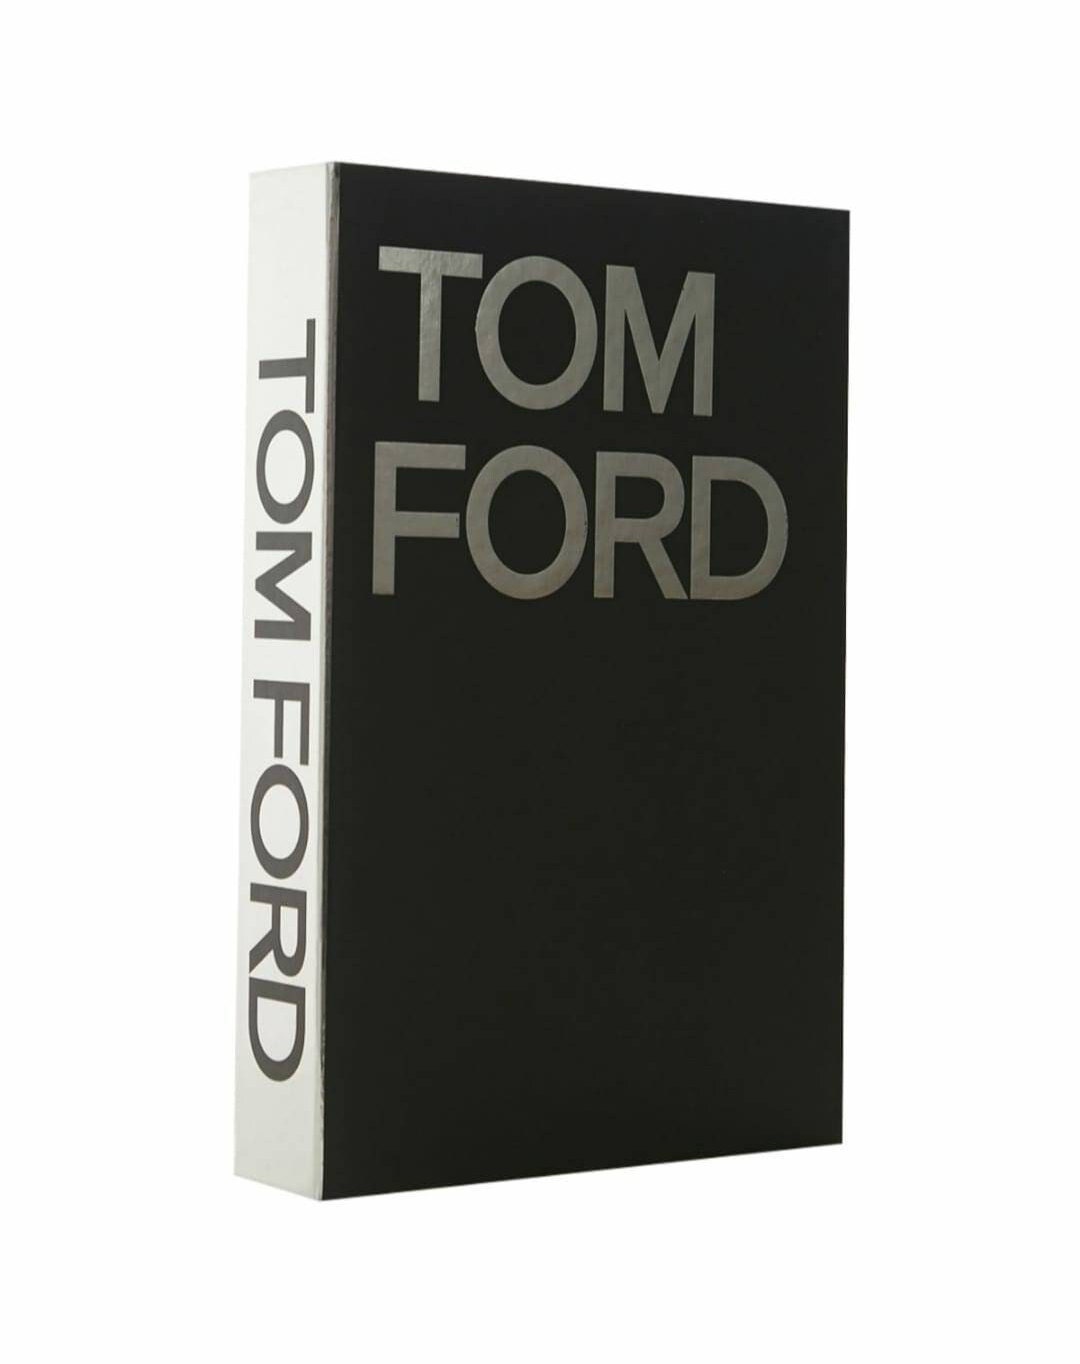 Tom Ford White Goldblack Grey Decorative Booksopenable Book - Etsy